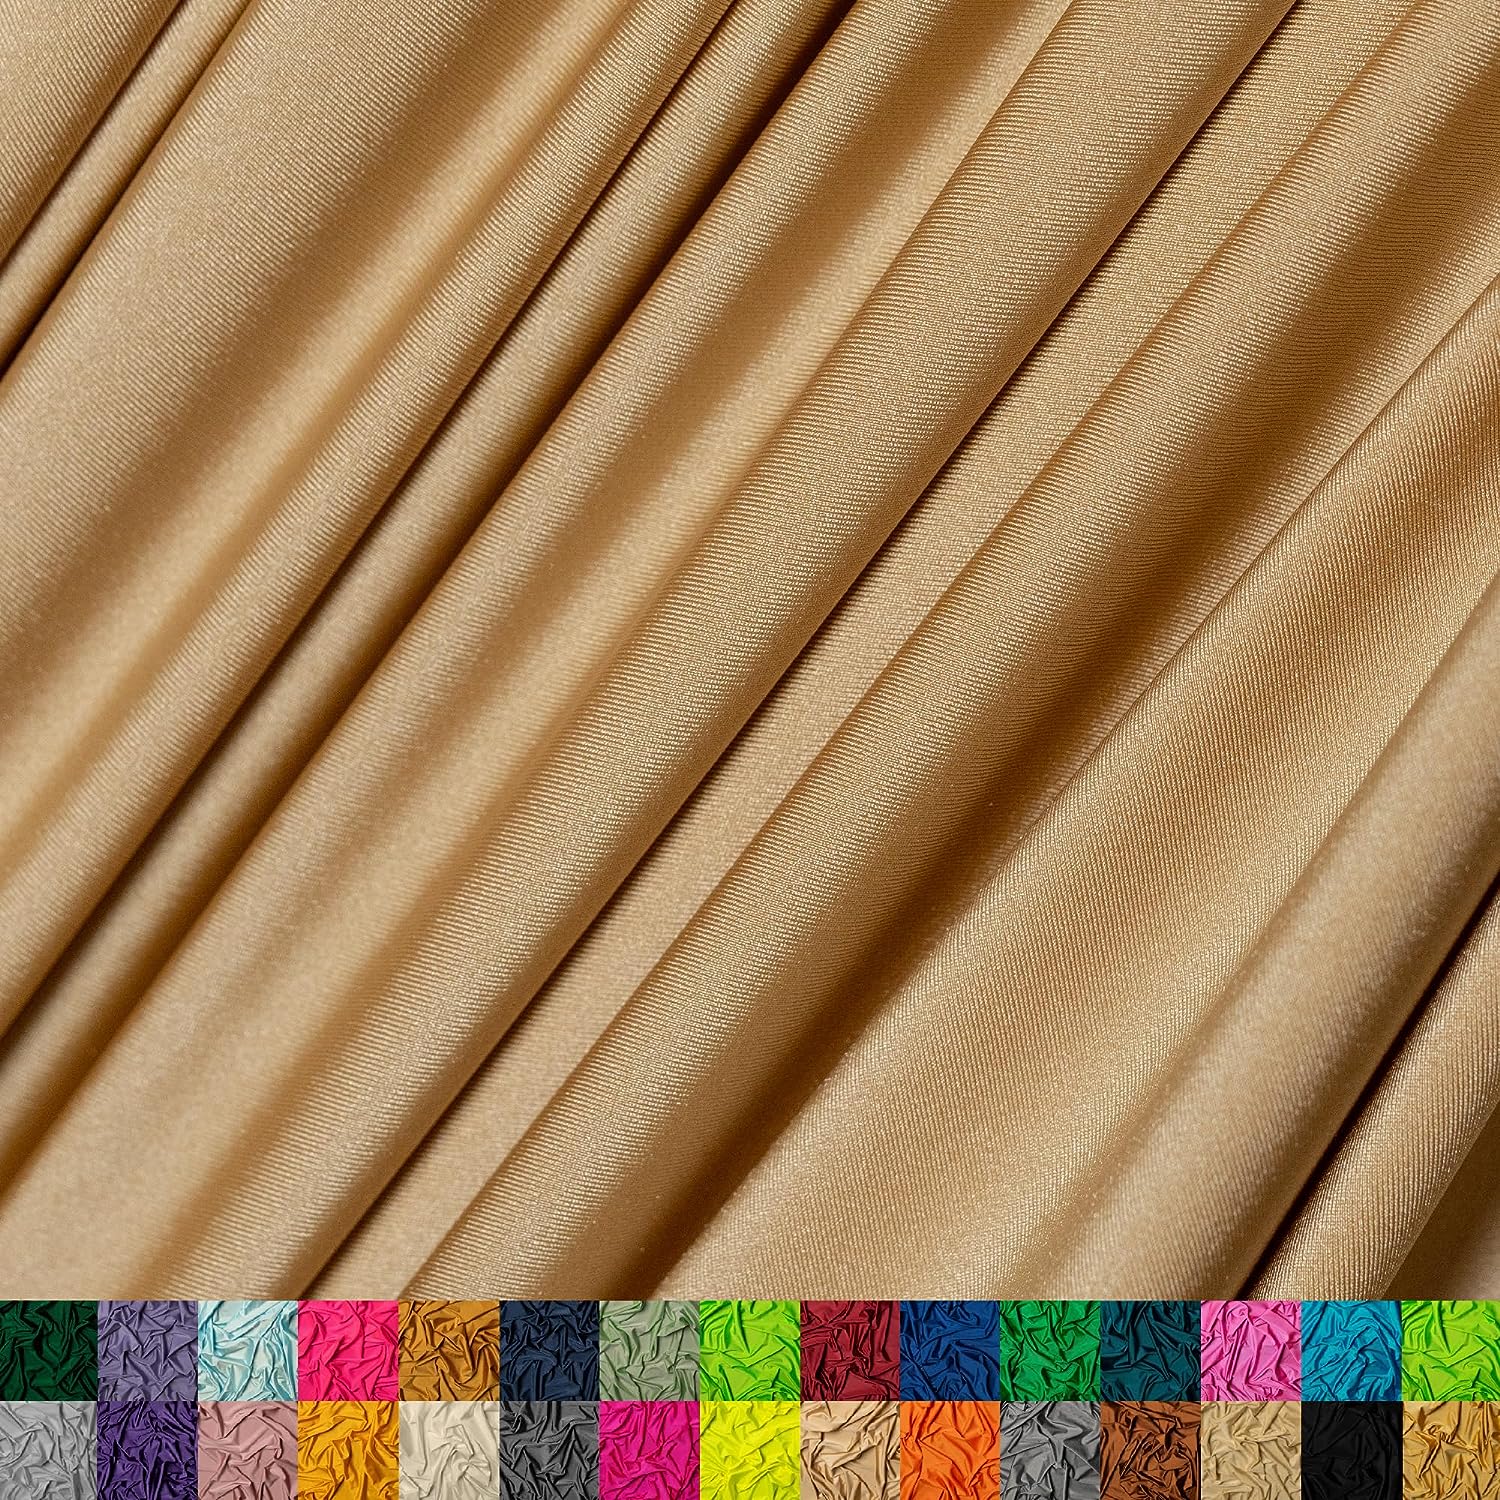 Nylon Spandex Fabric | 80% Nylon, 20% Spandex | Swimwear, Activewear Fabric  | 4-Way Stretch | Sports, Dance, Yoga (Neon Pink, 1 Yard)